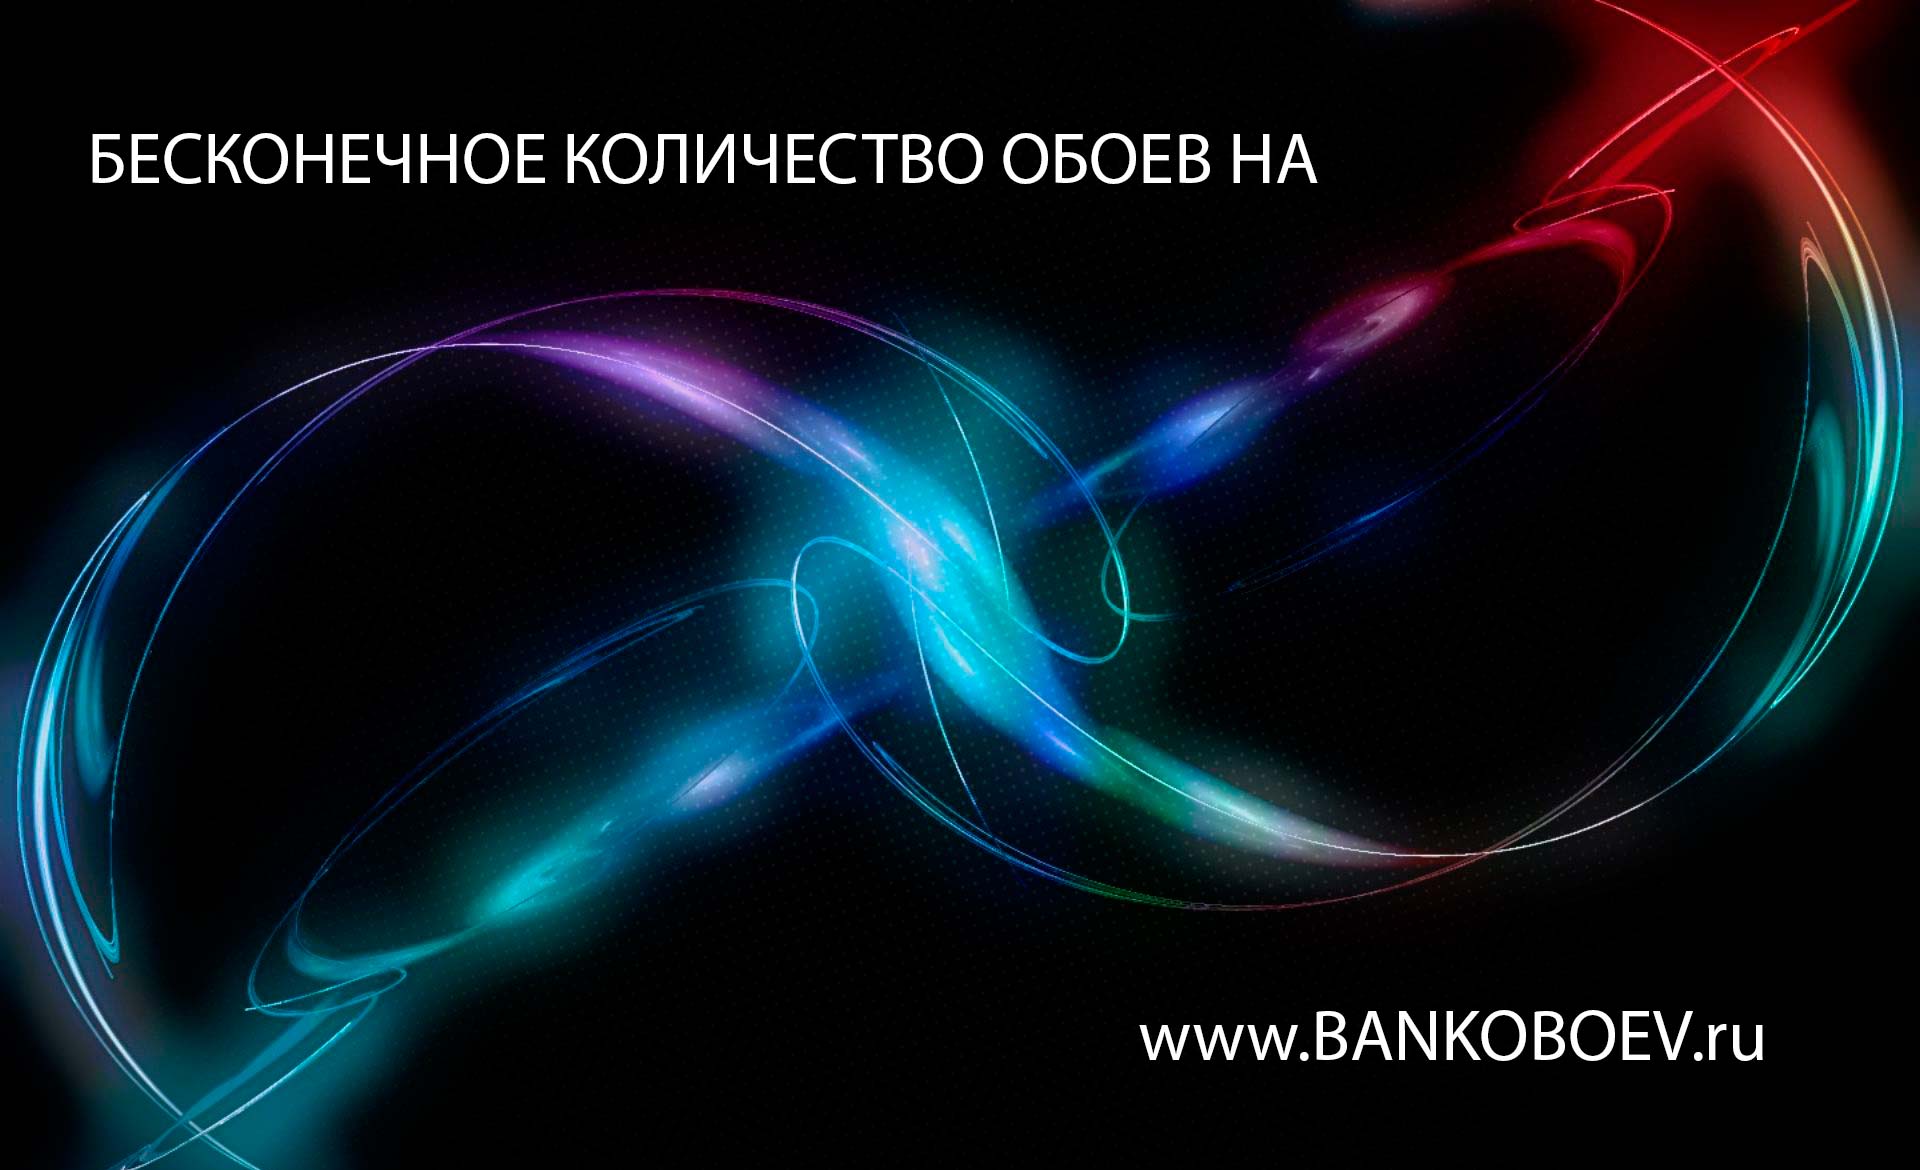 Bankoboev Ru Image Mjawntc2 Jpg